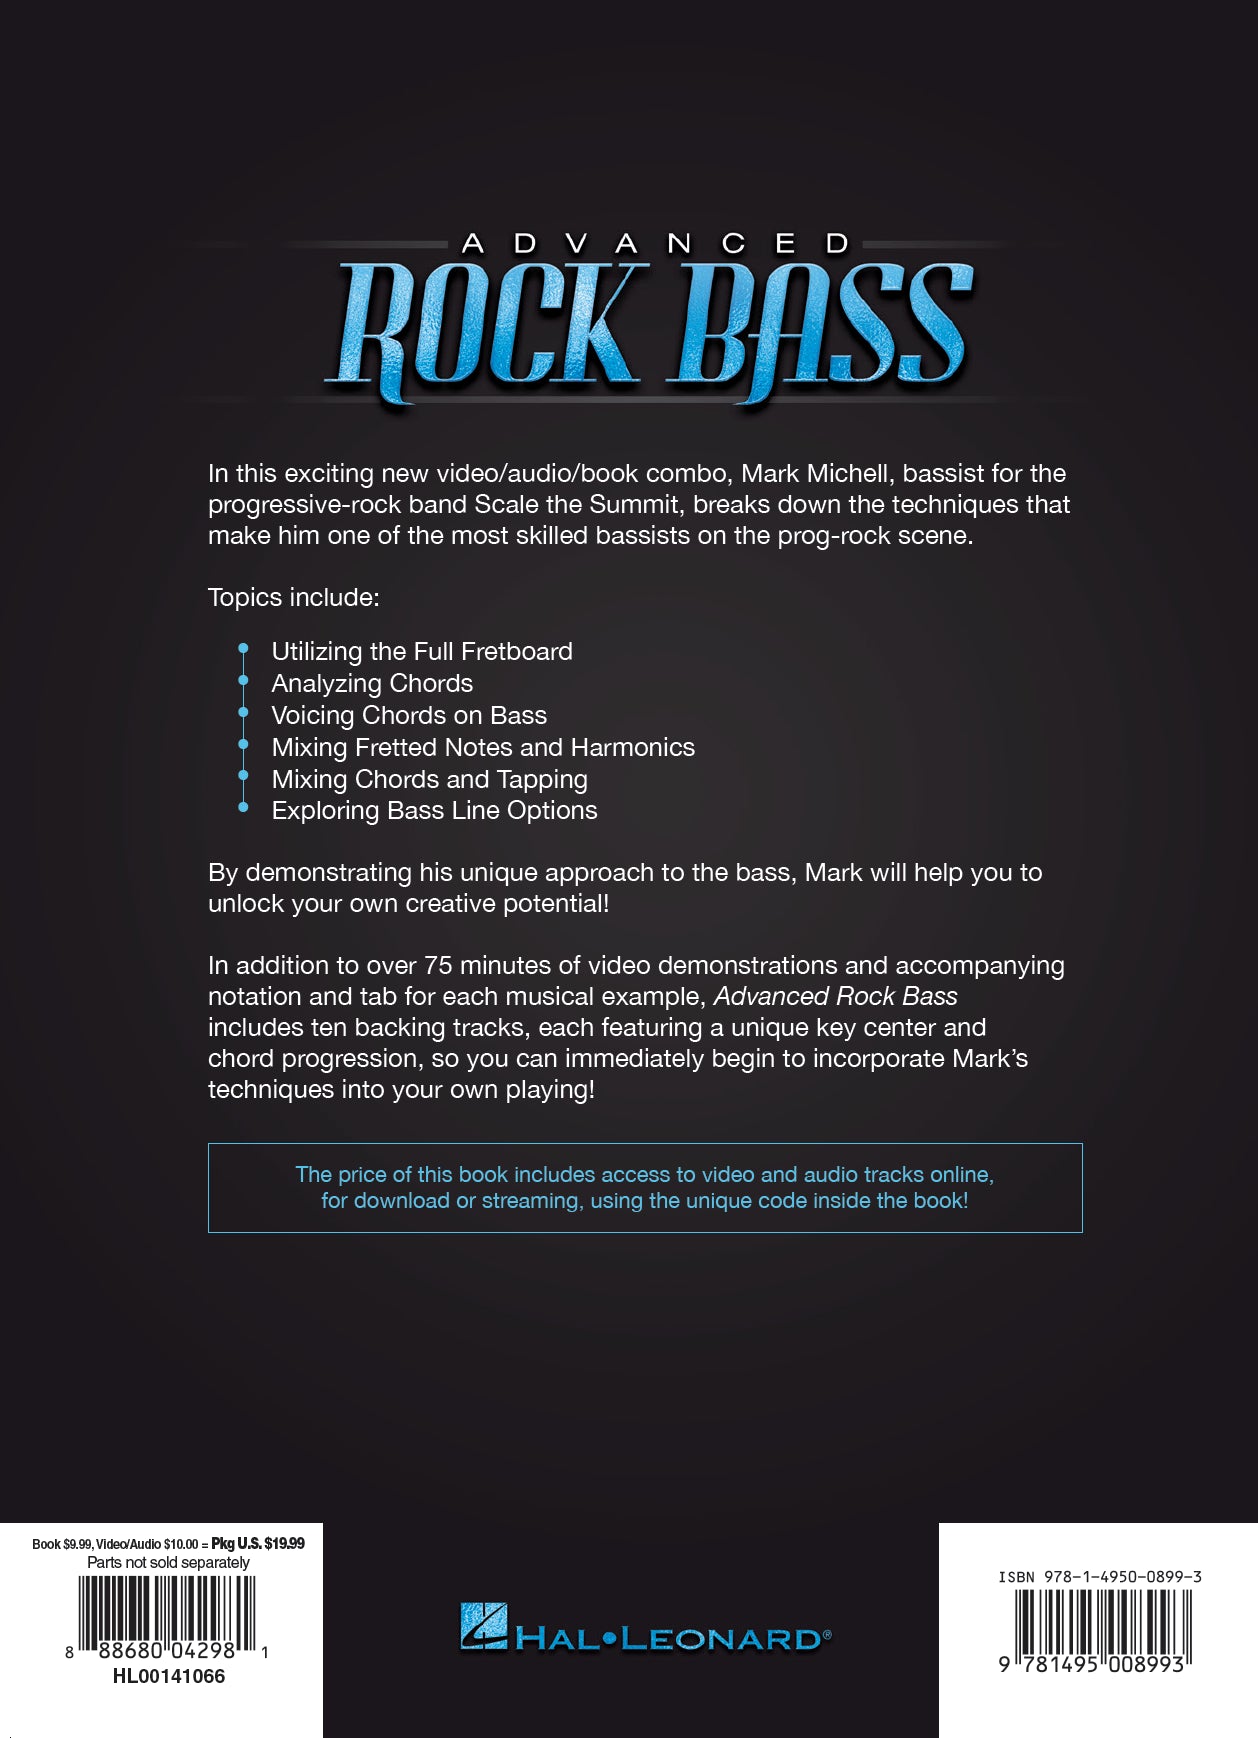 "Advanced Rock Bass" by Mark Michell